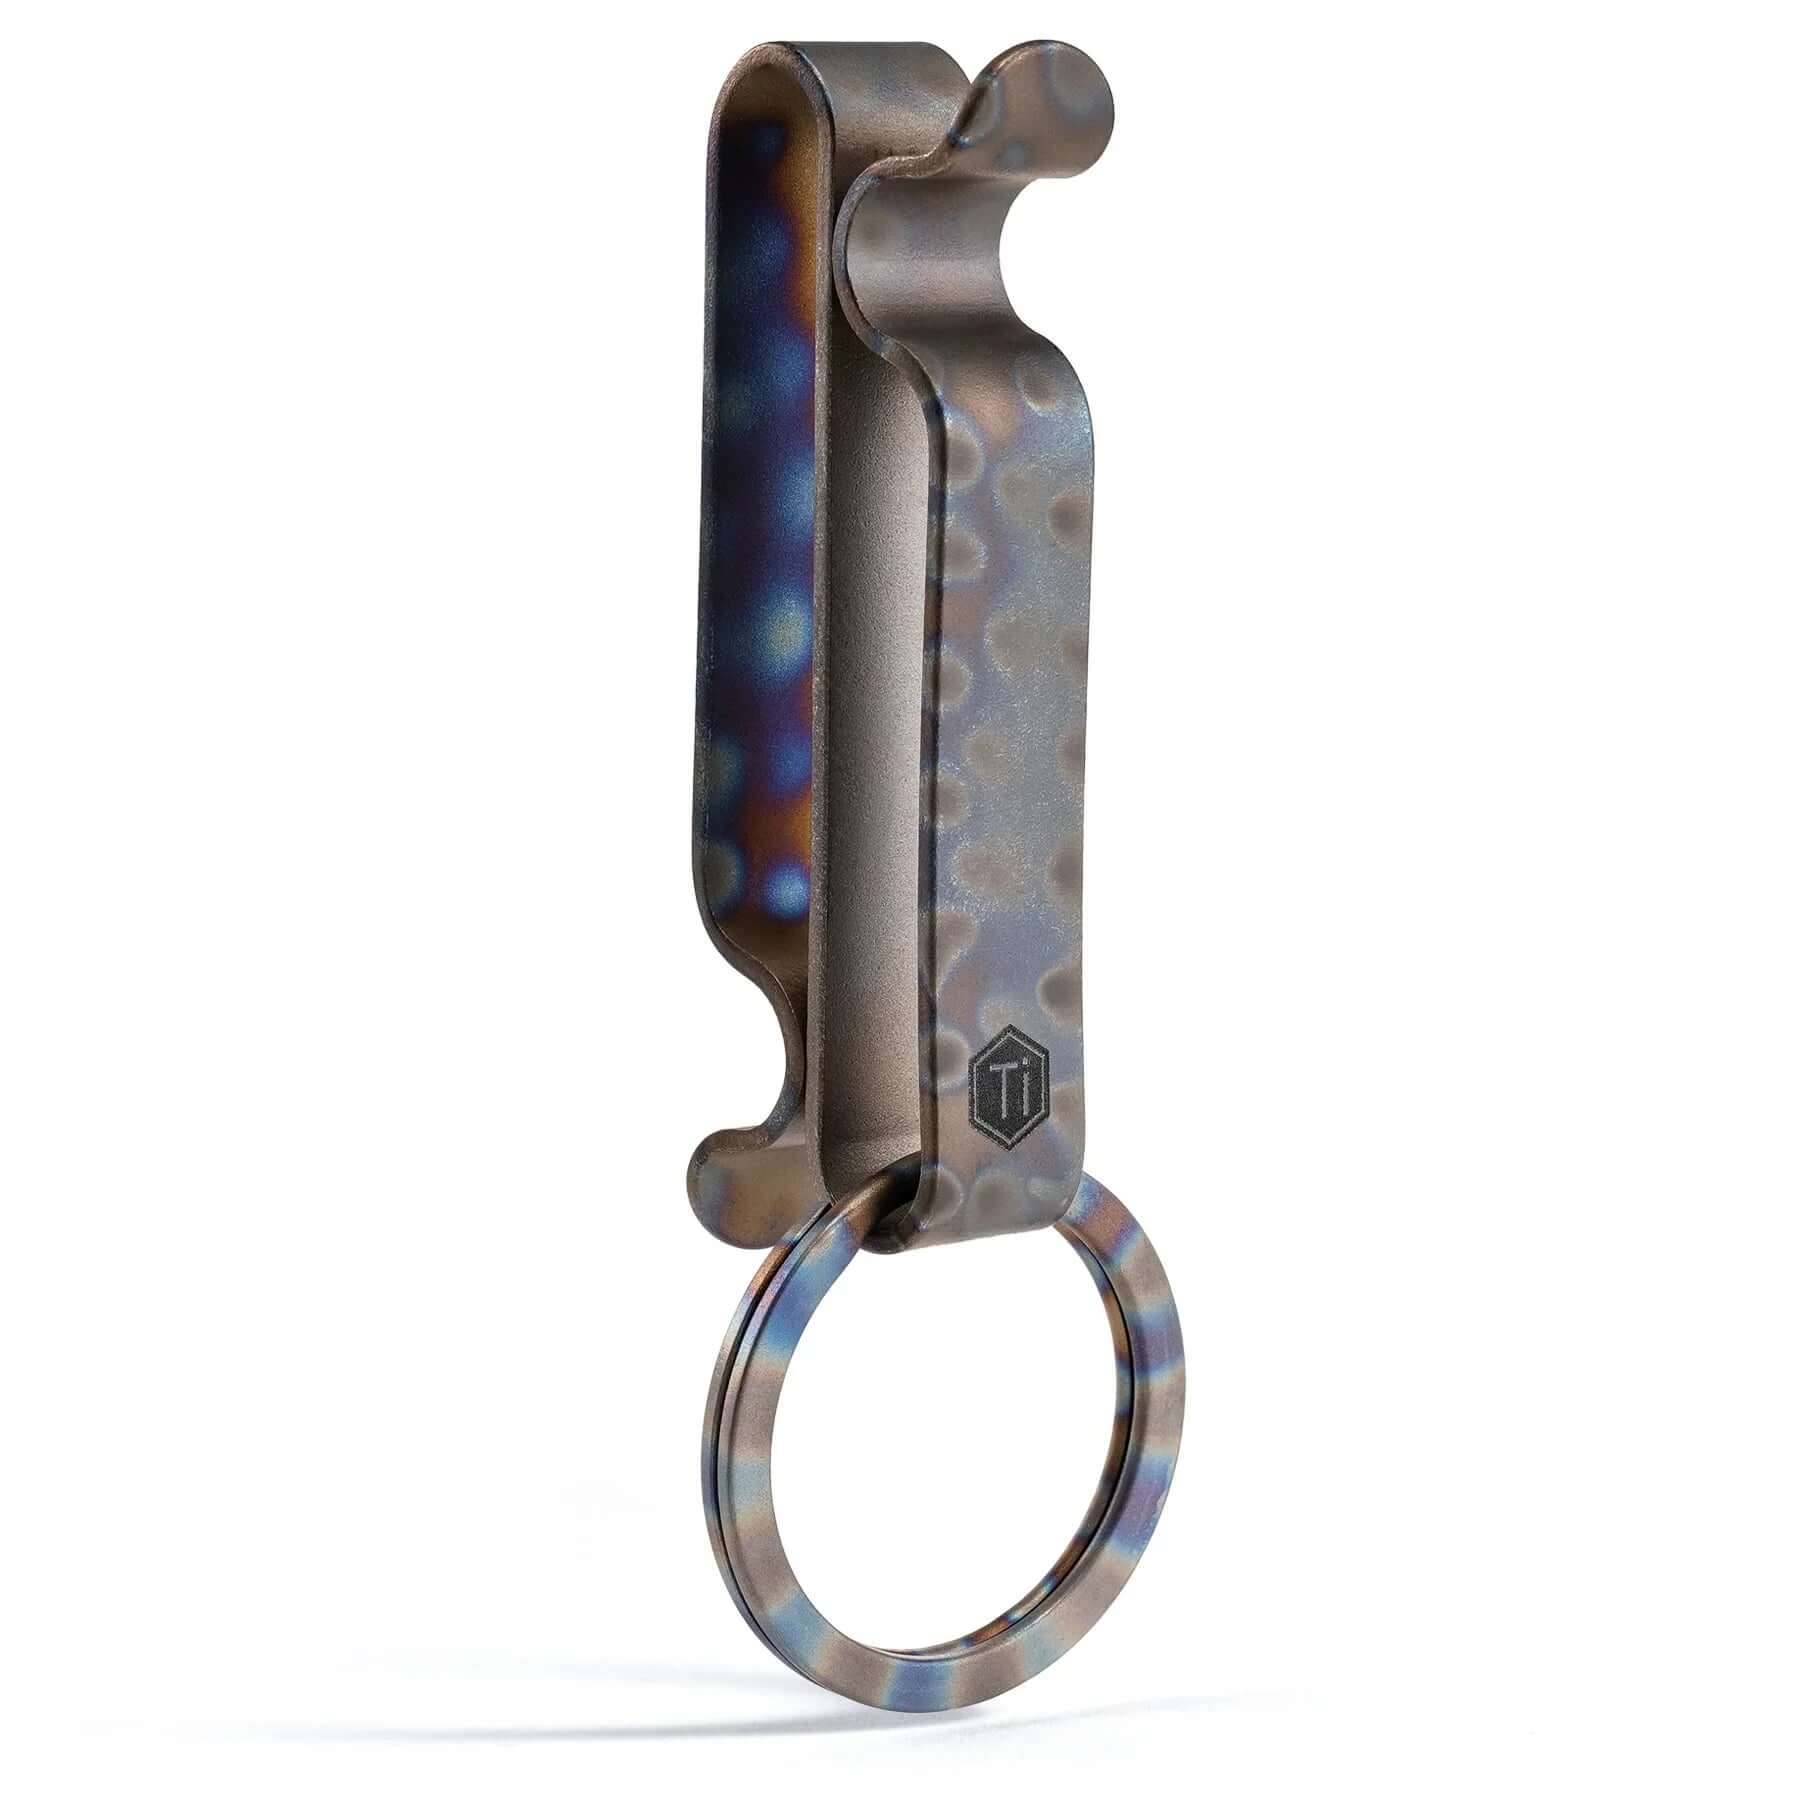 KM00 Titanium Alloy Keychain Belt Clip （BLACK）